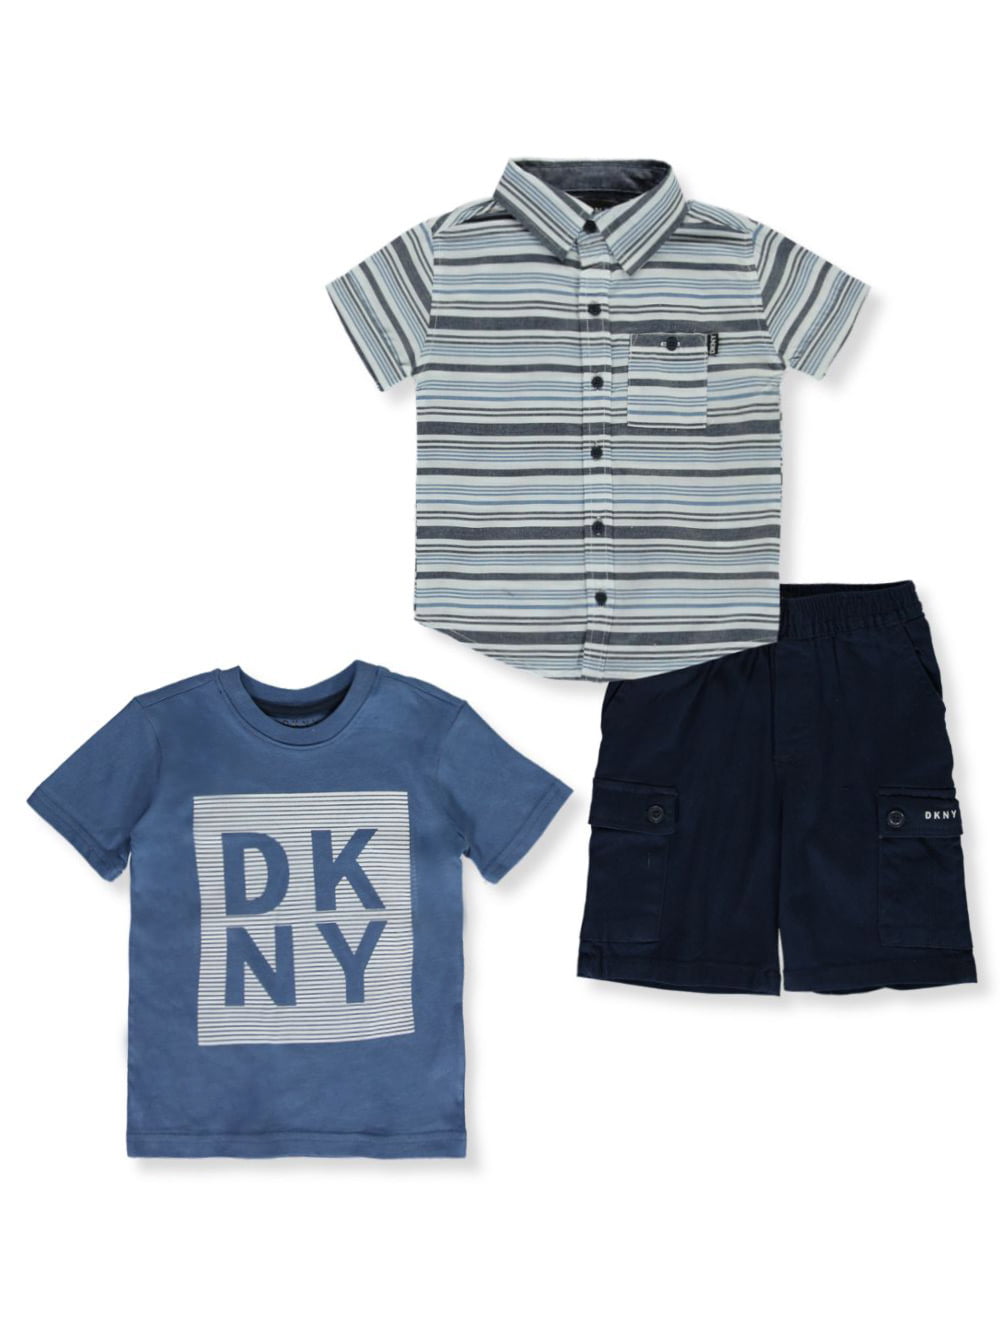 DKNY Boys Logo Woven Shirt 3pc Short Set Size 2T 3T 4T 4 5 6 7 8 10 12 